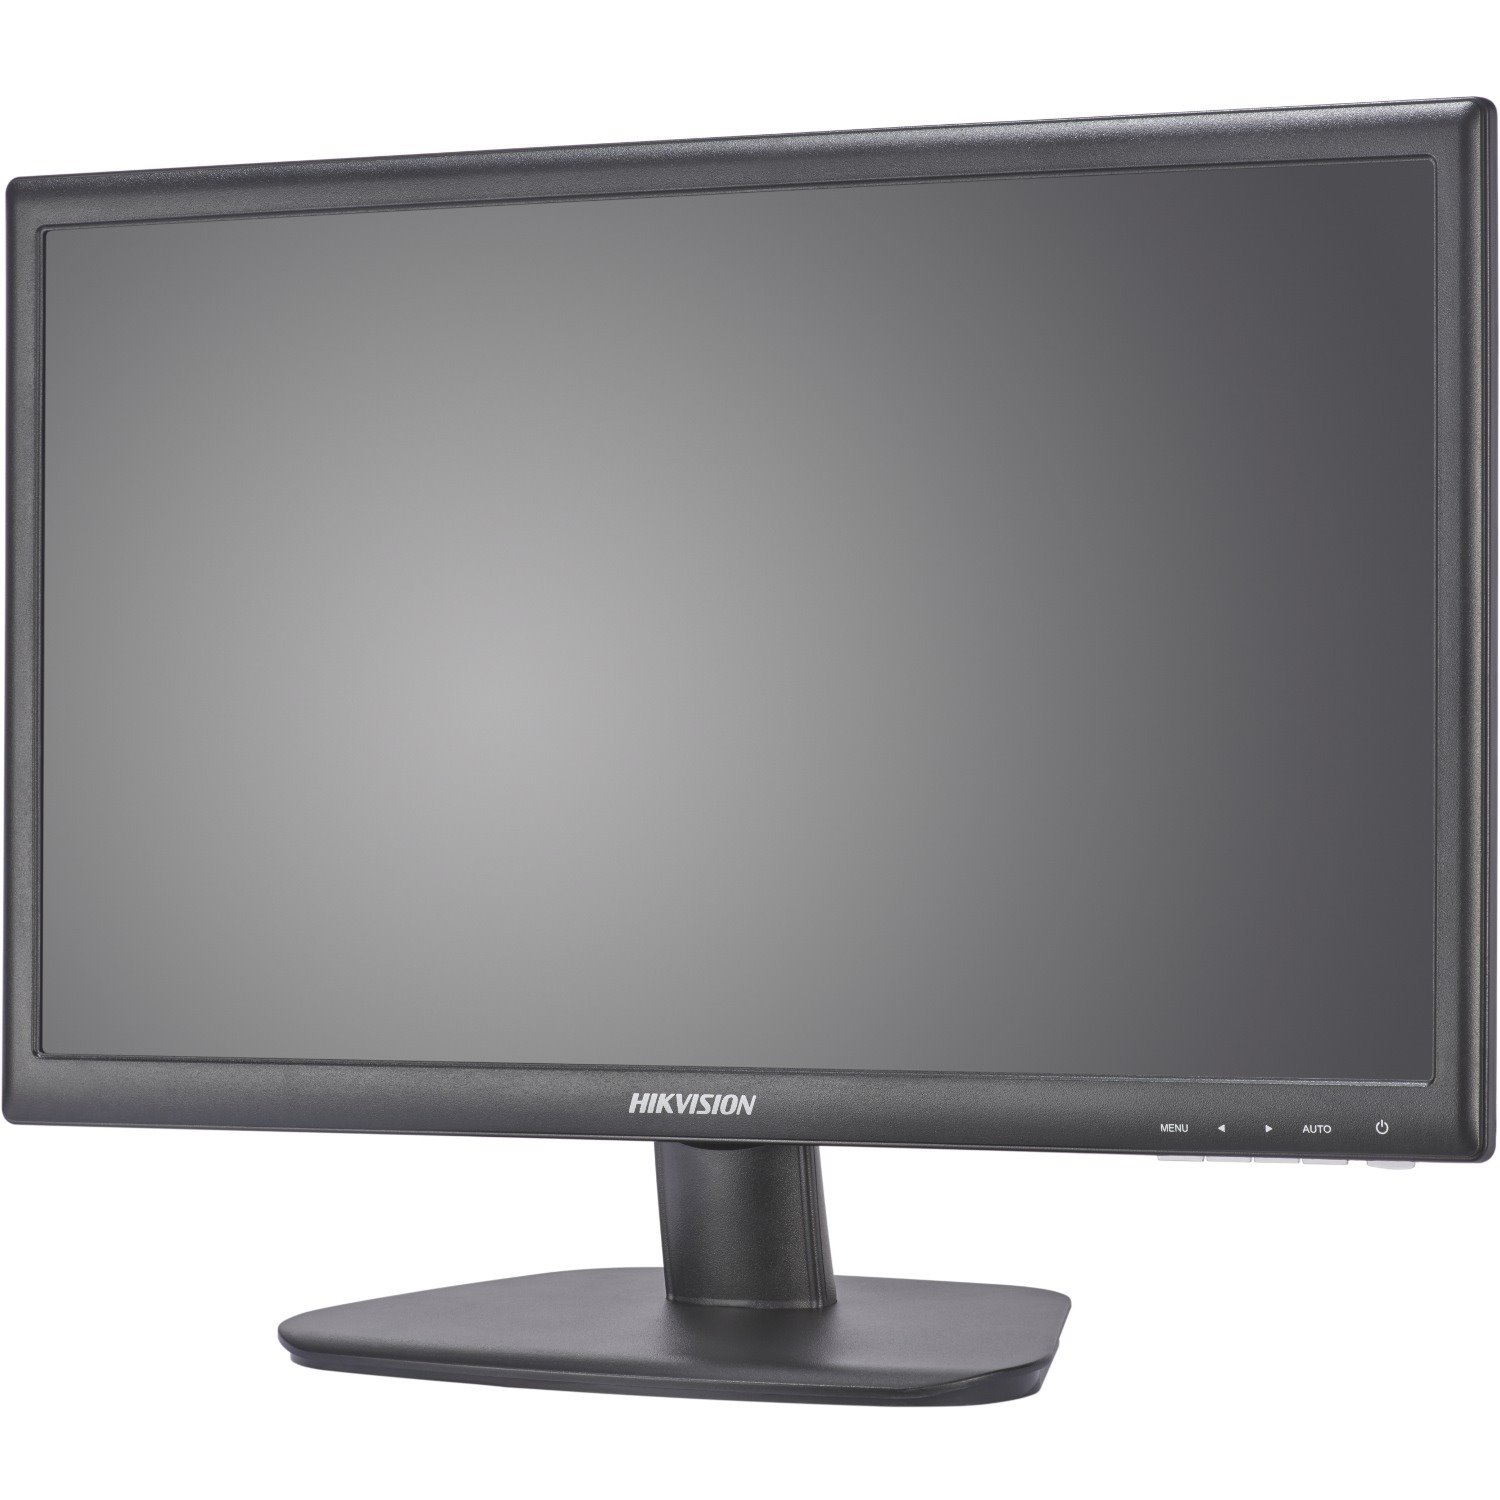 Hikvision DS-D5024FC 9.3" Full HD LED LCD Monitor - Black